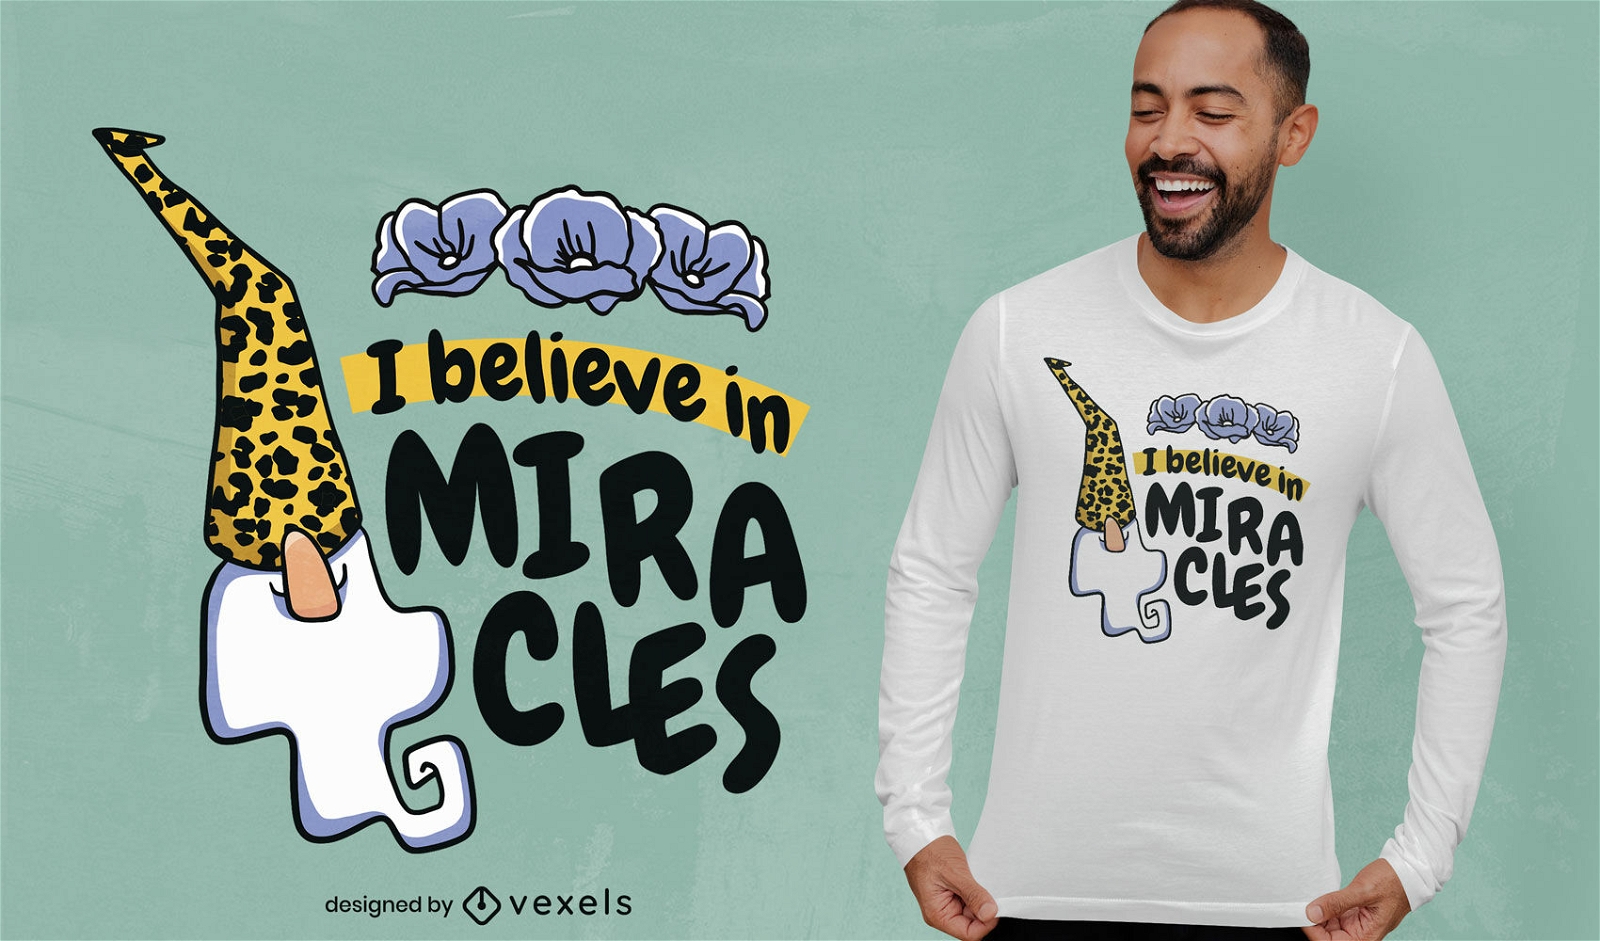 Glaube an Wunder-T-Shirt-Design